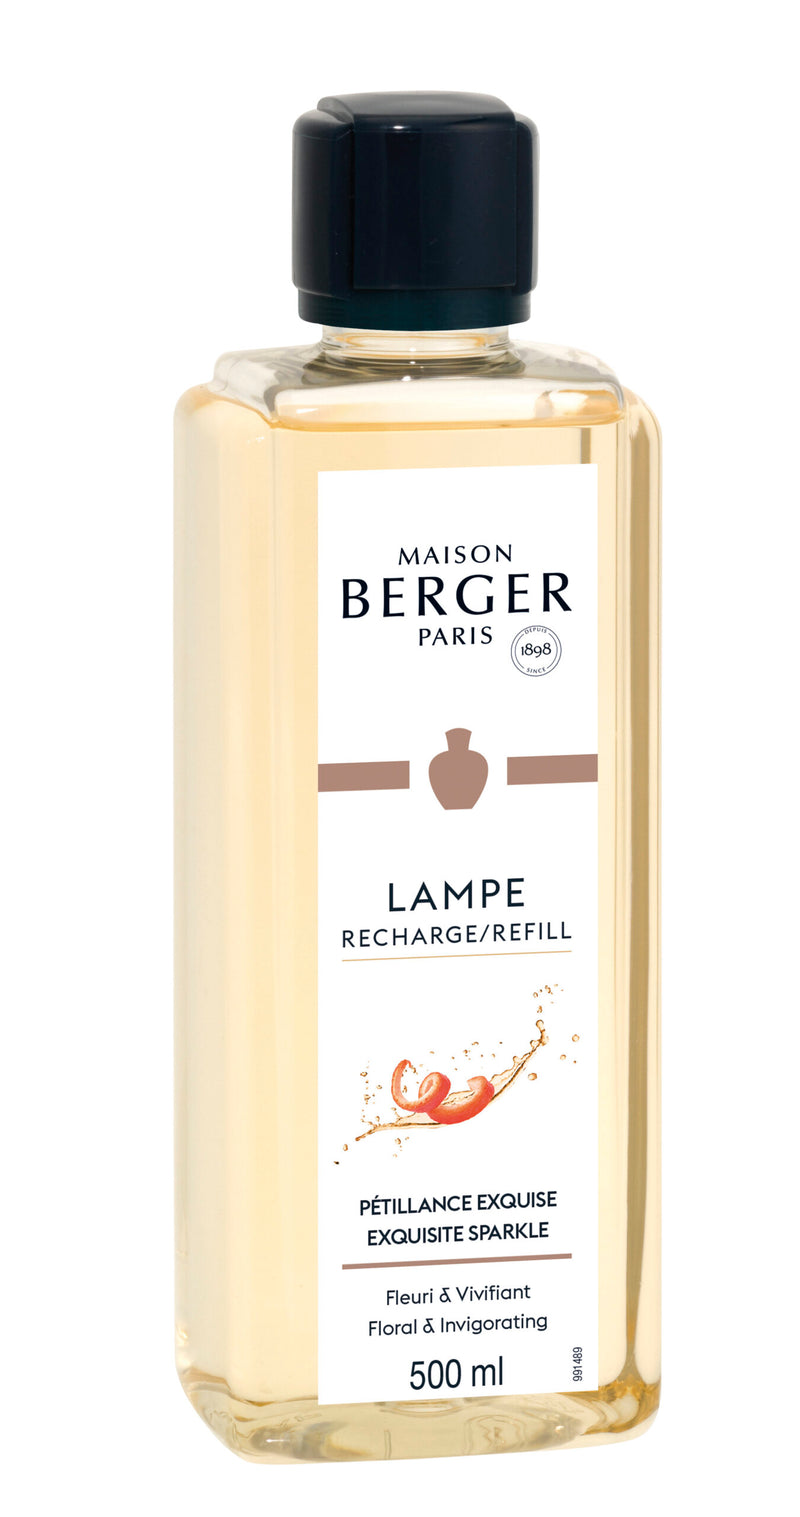 Lampe Berger huisparfum 500 ml - Exquisite sparkle / Pétillance Exquise